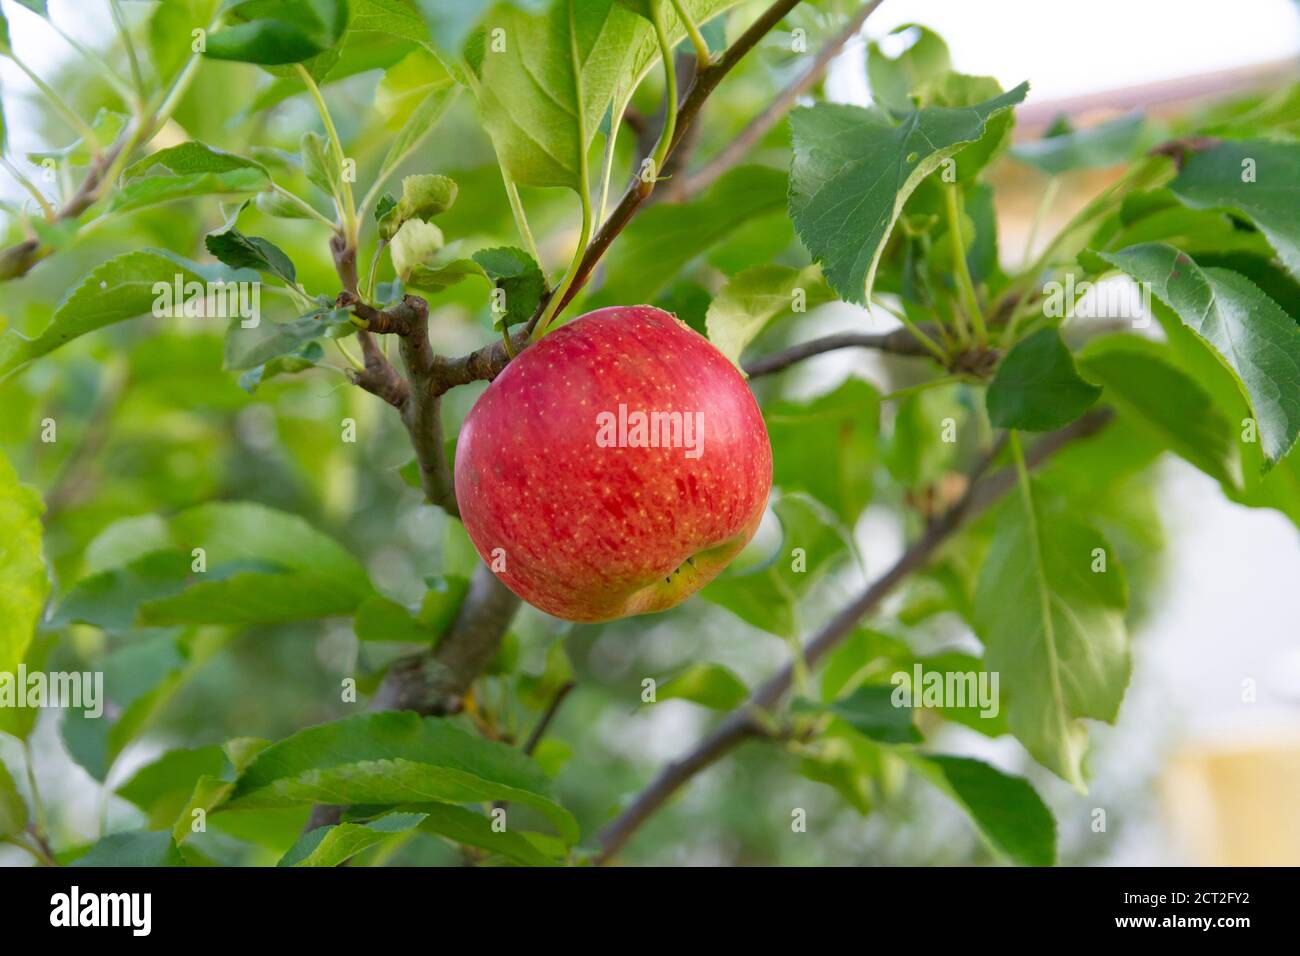 apple growing on branch in garden Stock Photo